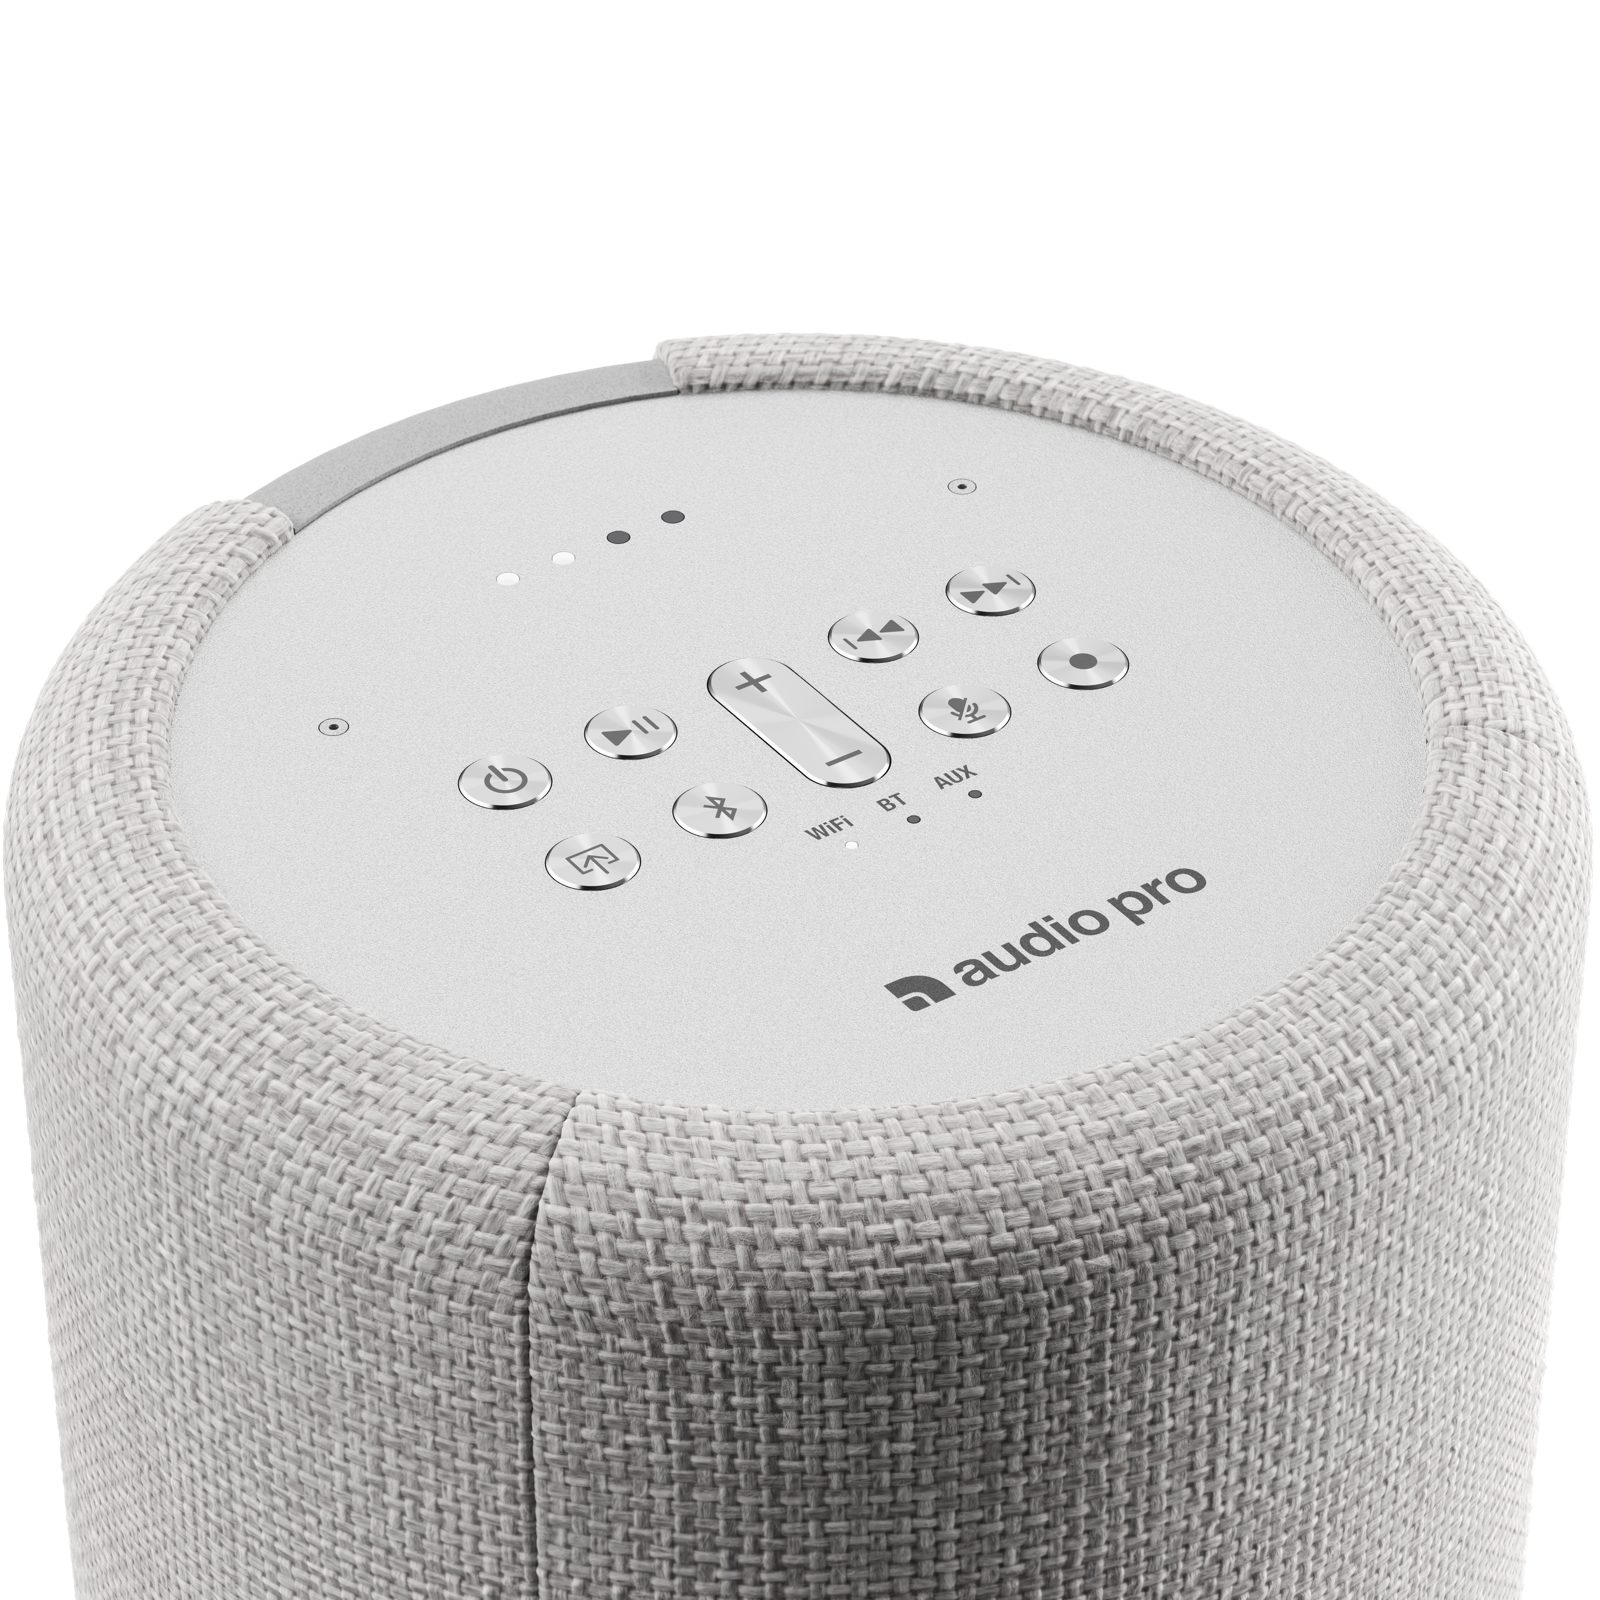 Audio Pro 2 Home Hellgrau Lautsprecher & Assistant Speaker AirPlay Google Smarter